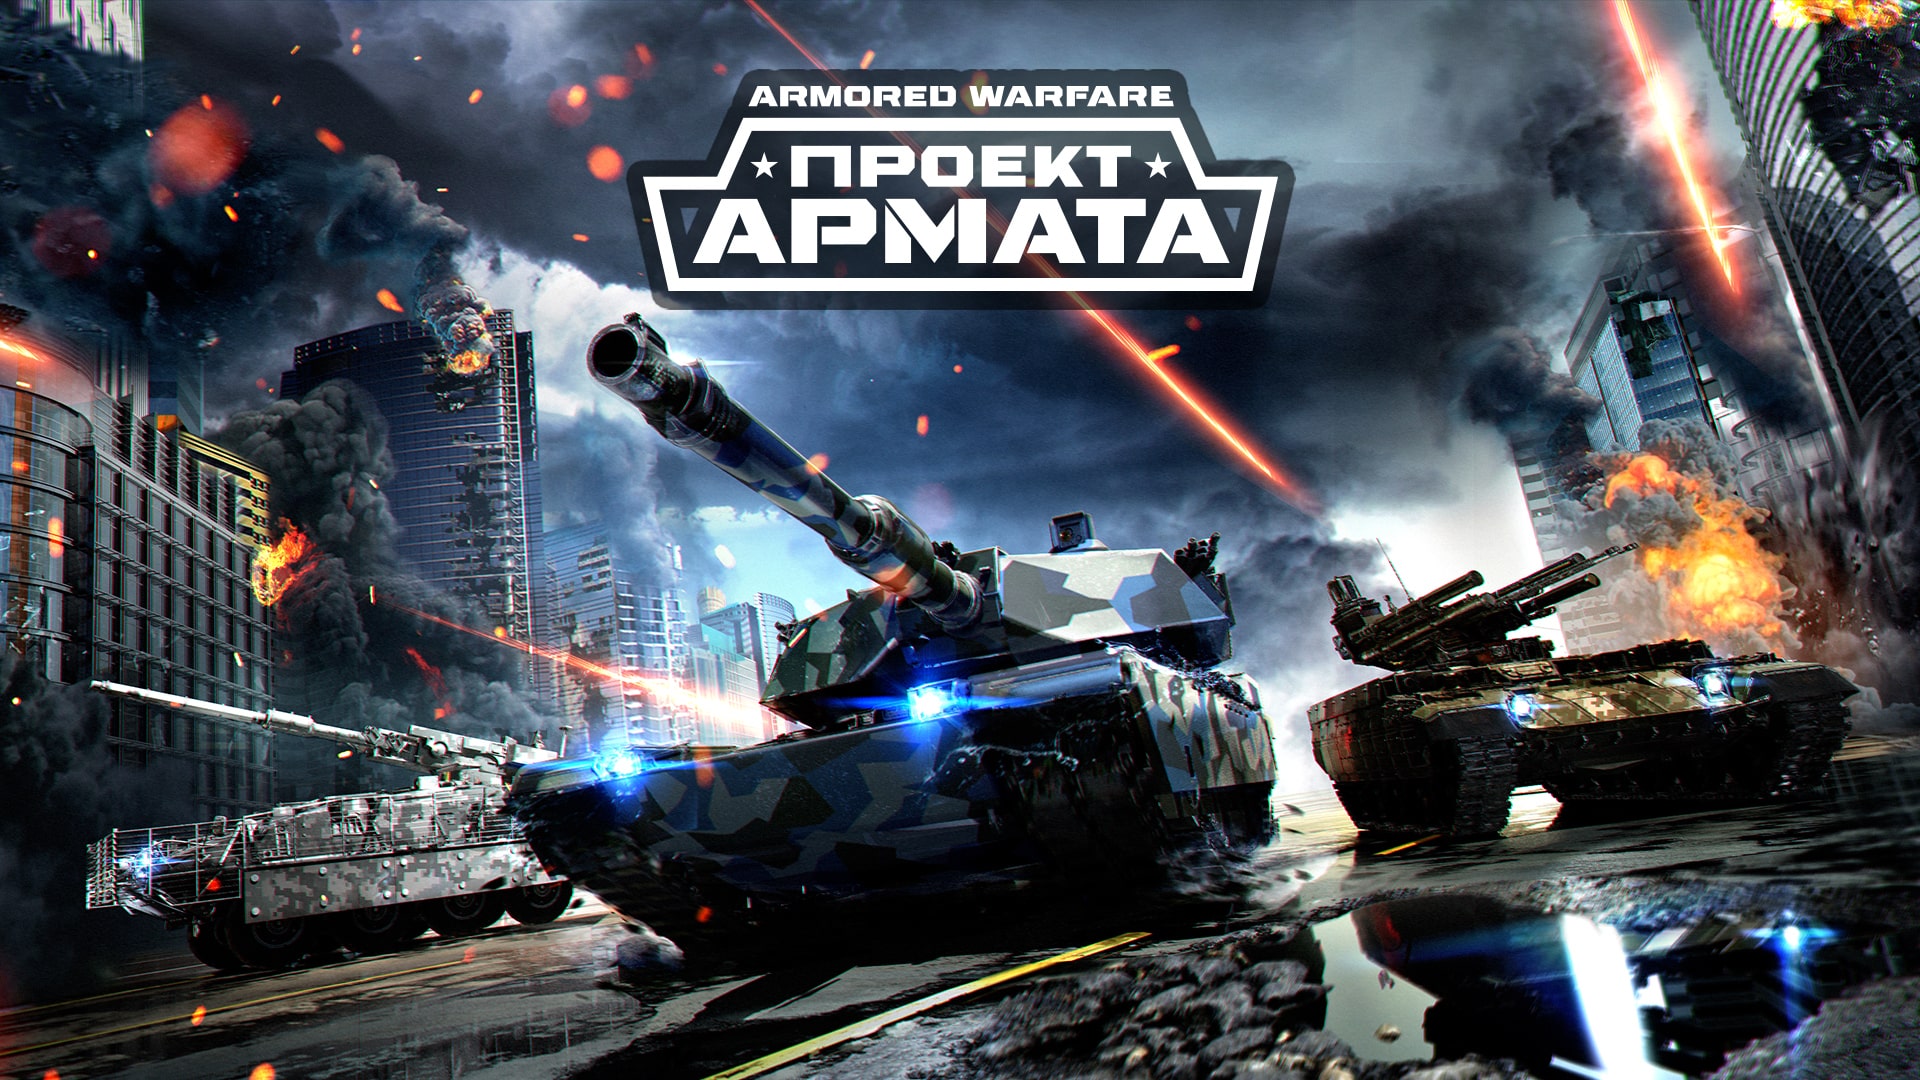 Armored Warfare (Проект "Армата")